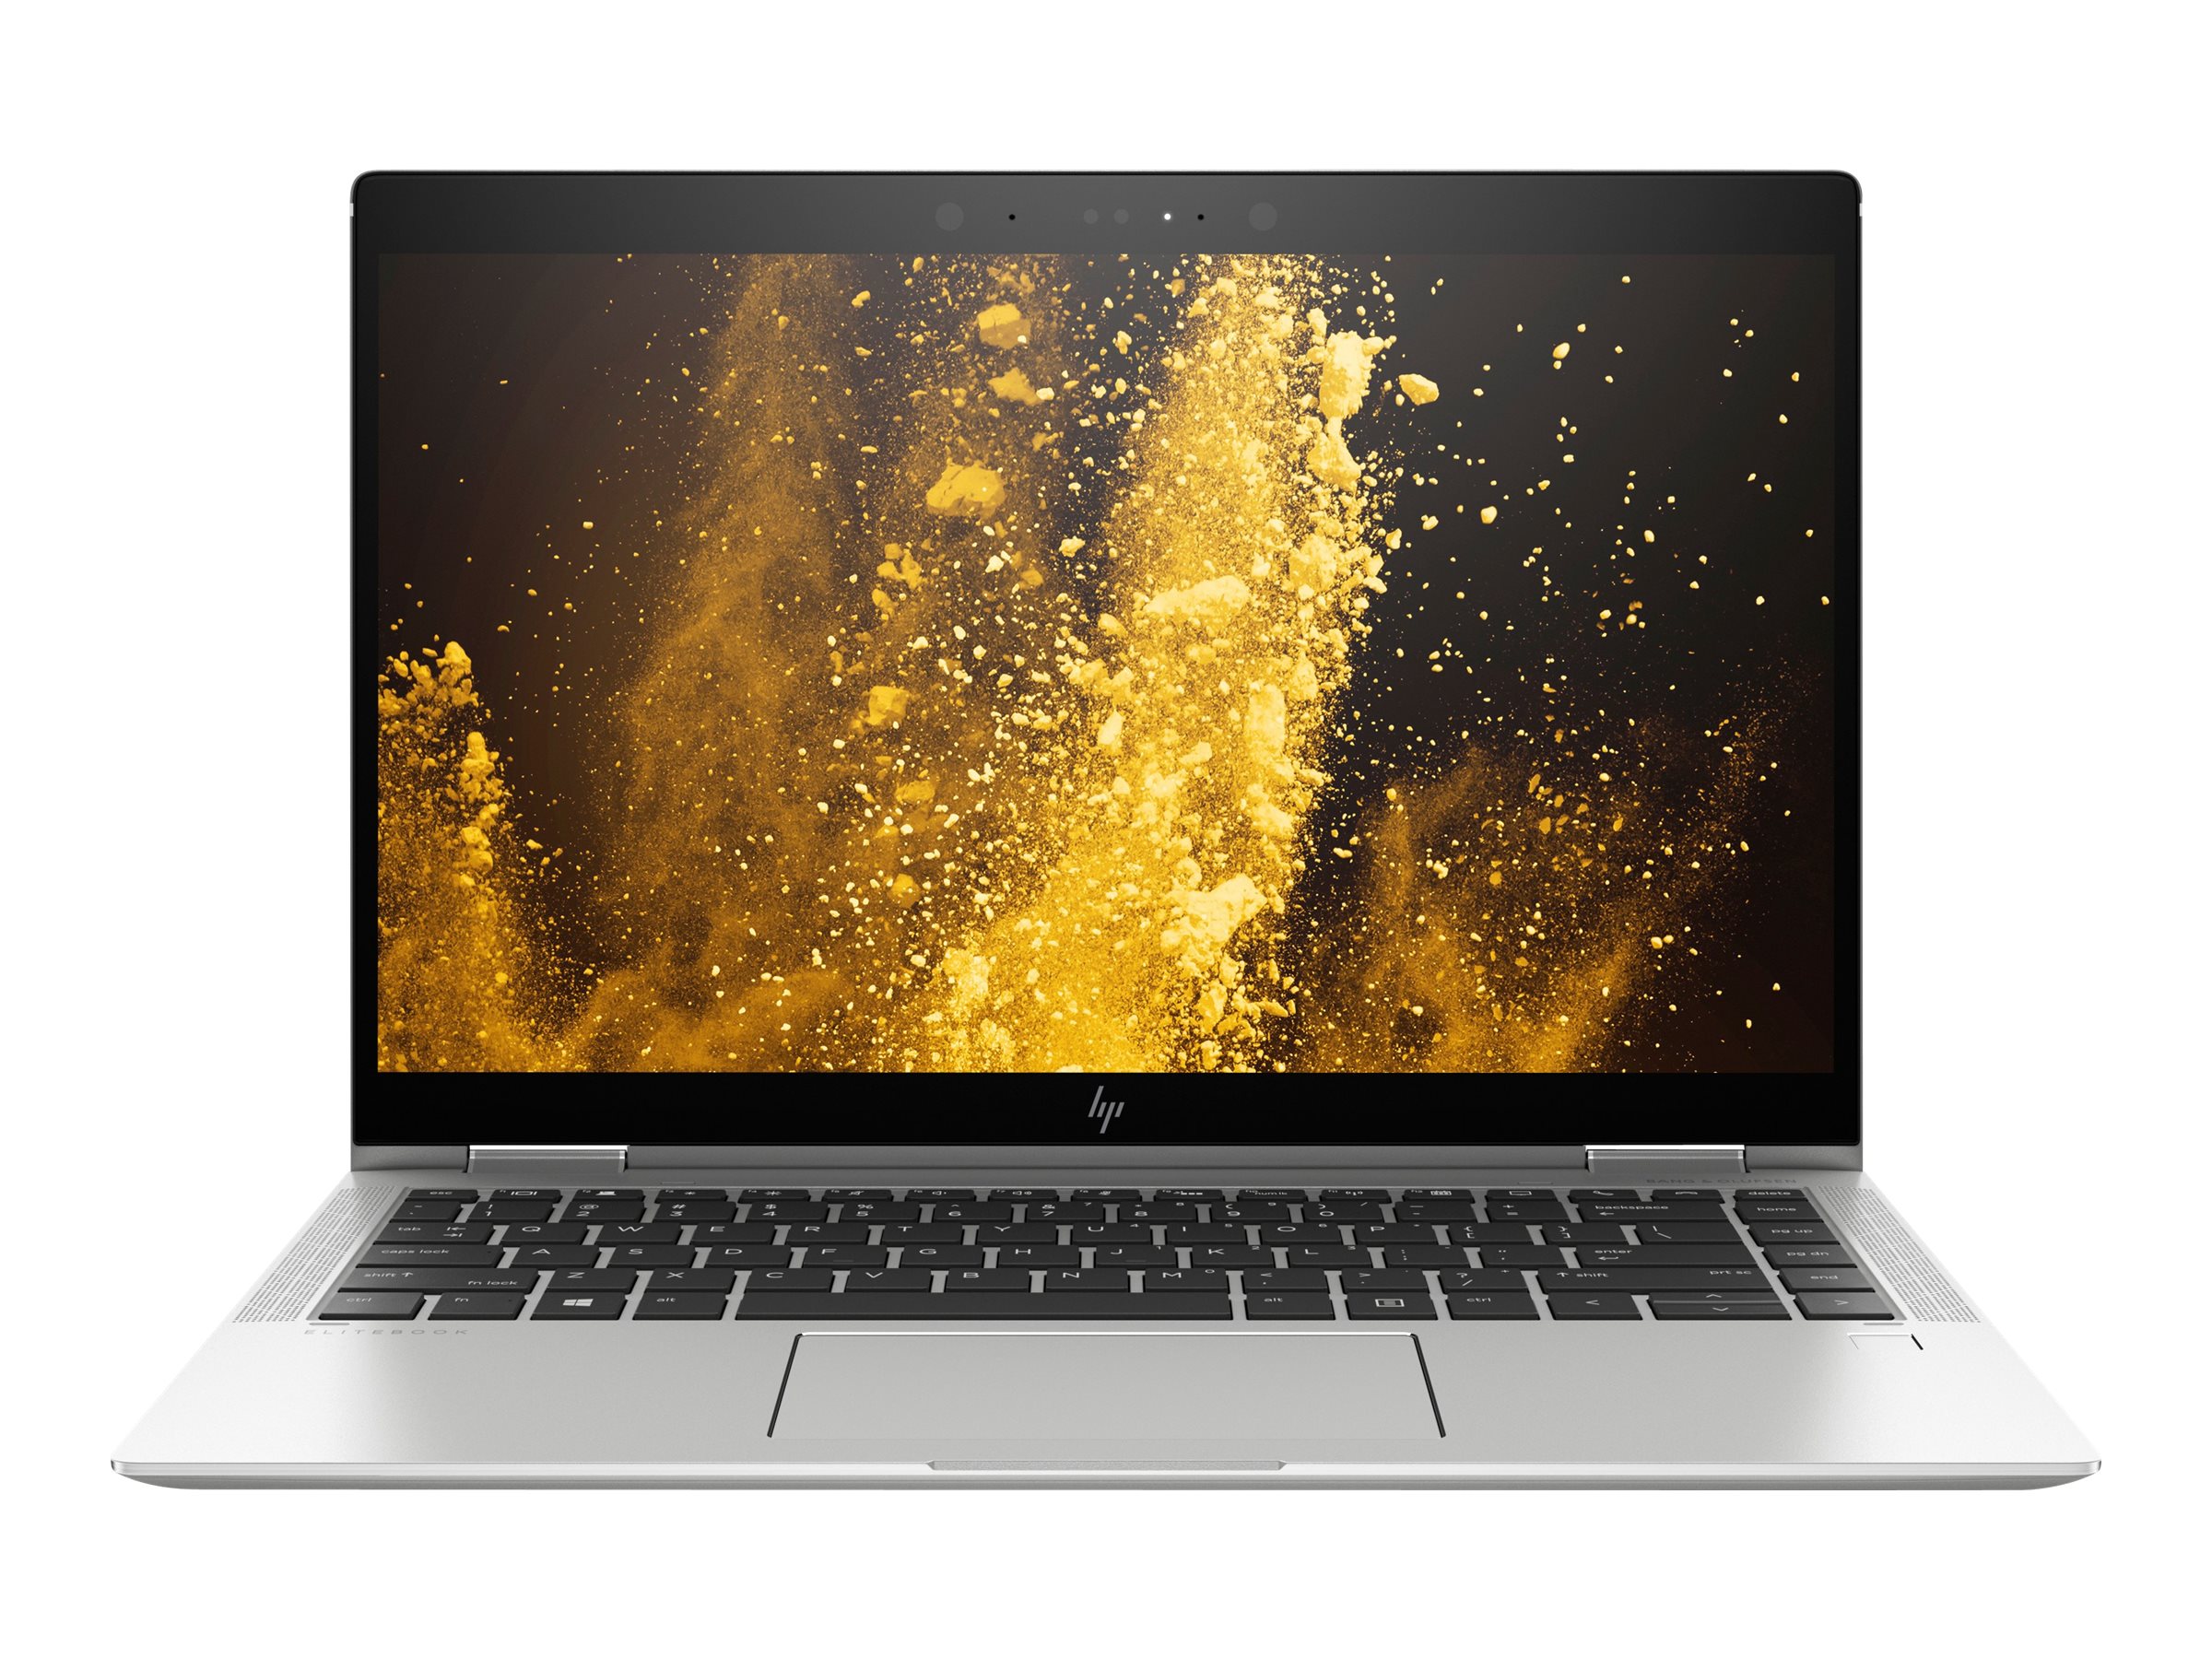 HP EliteBook x360 (1040 G5 Notebook)